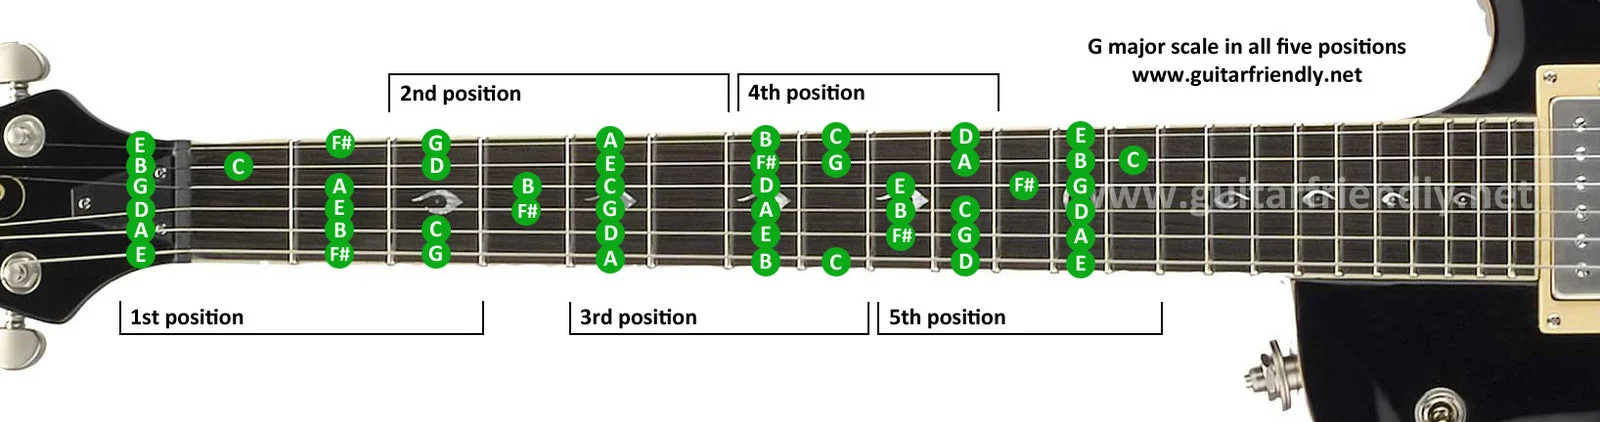 g-major-guitar-scale-fretboard.webp